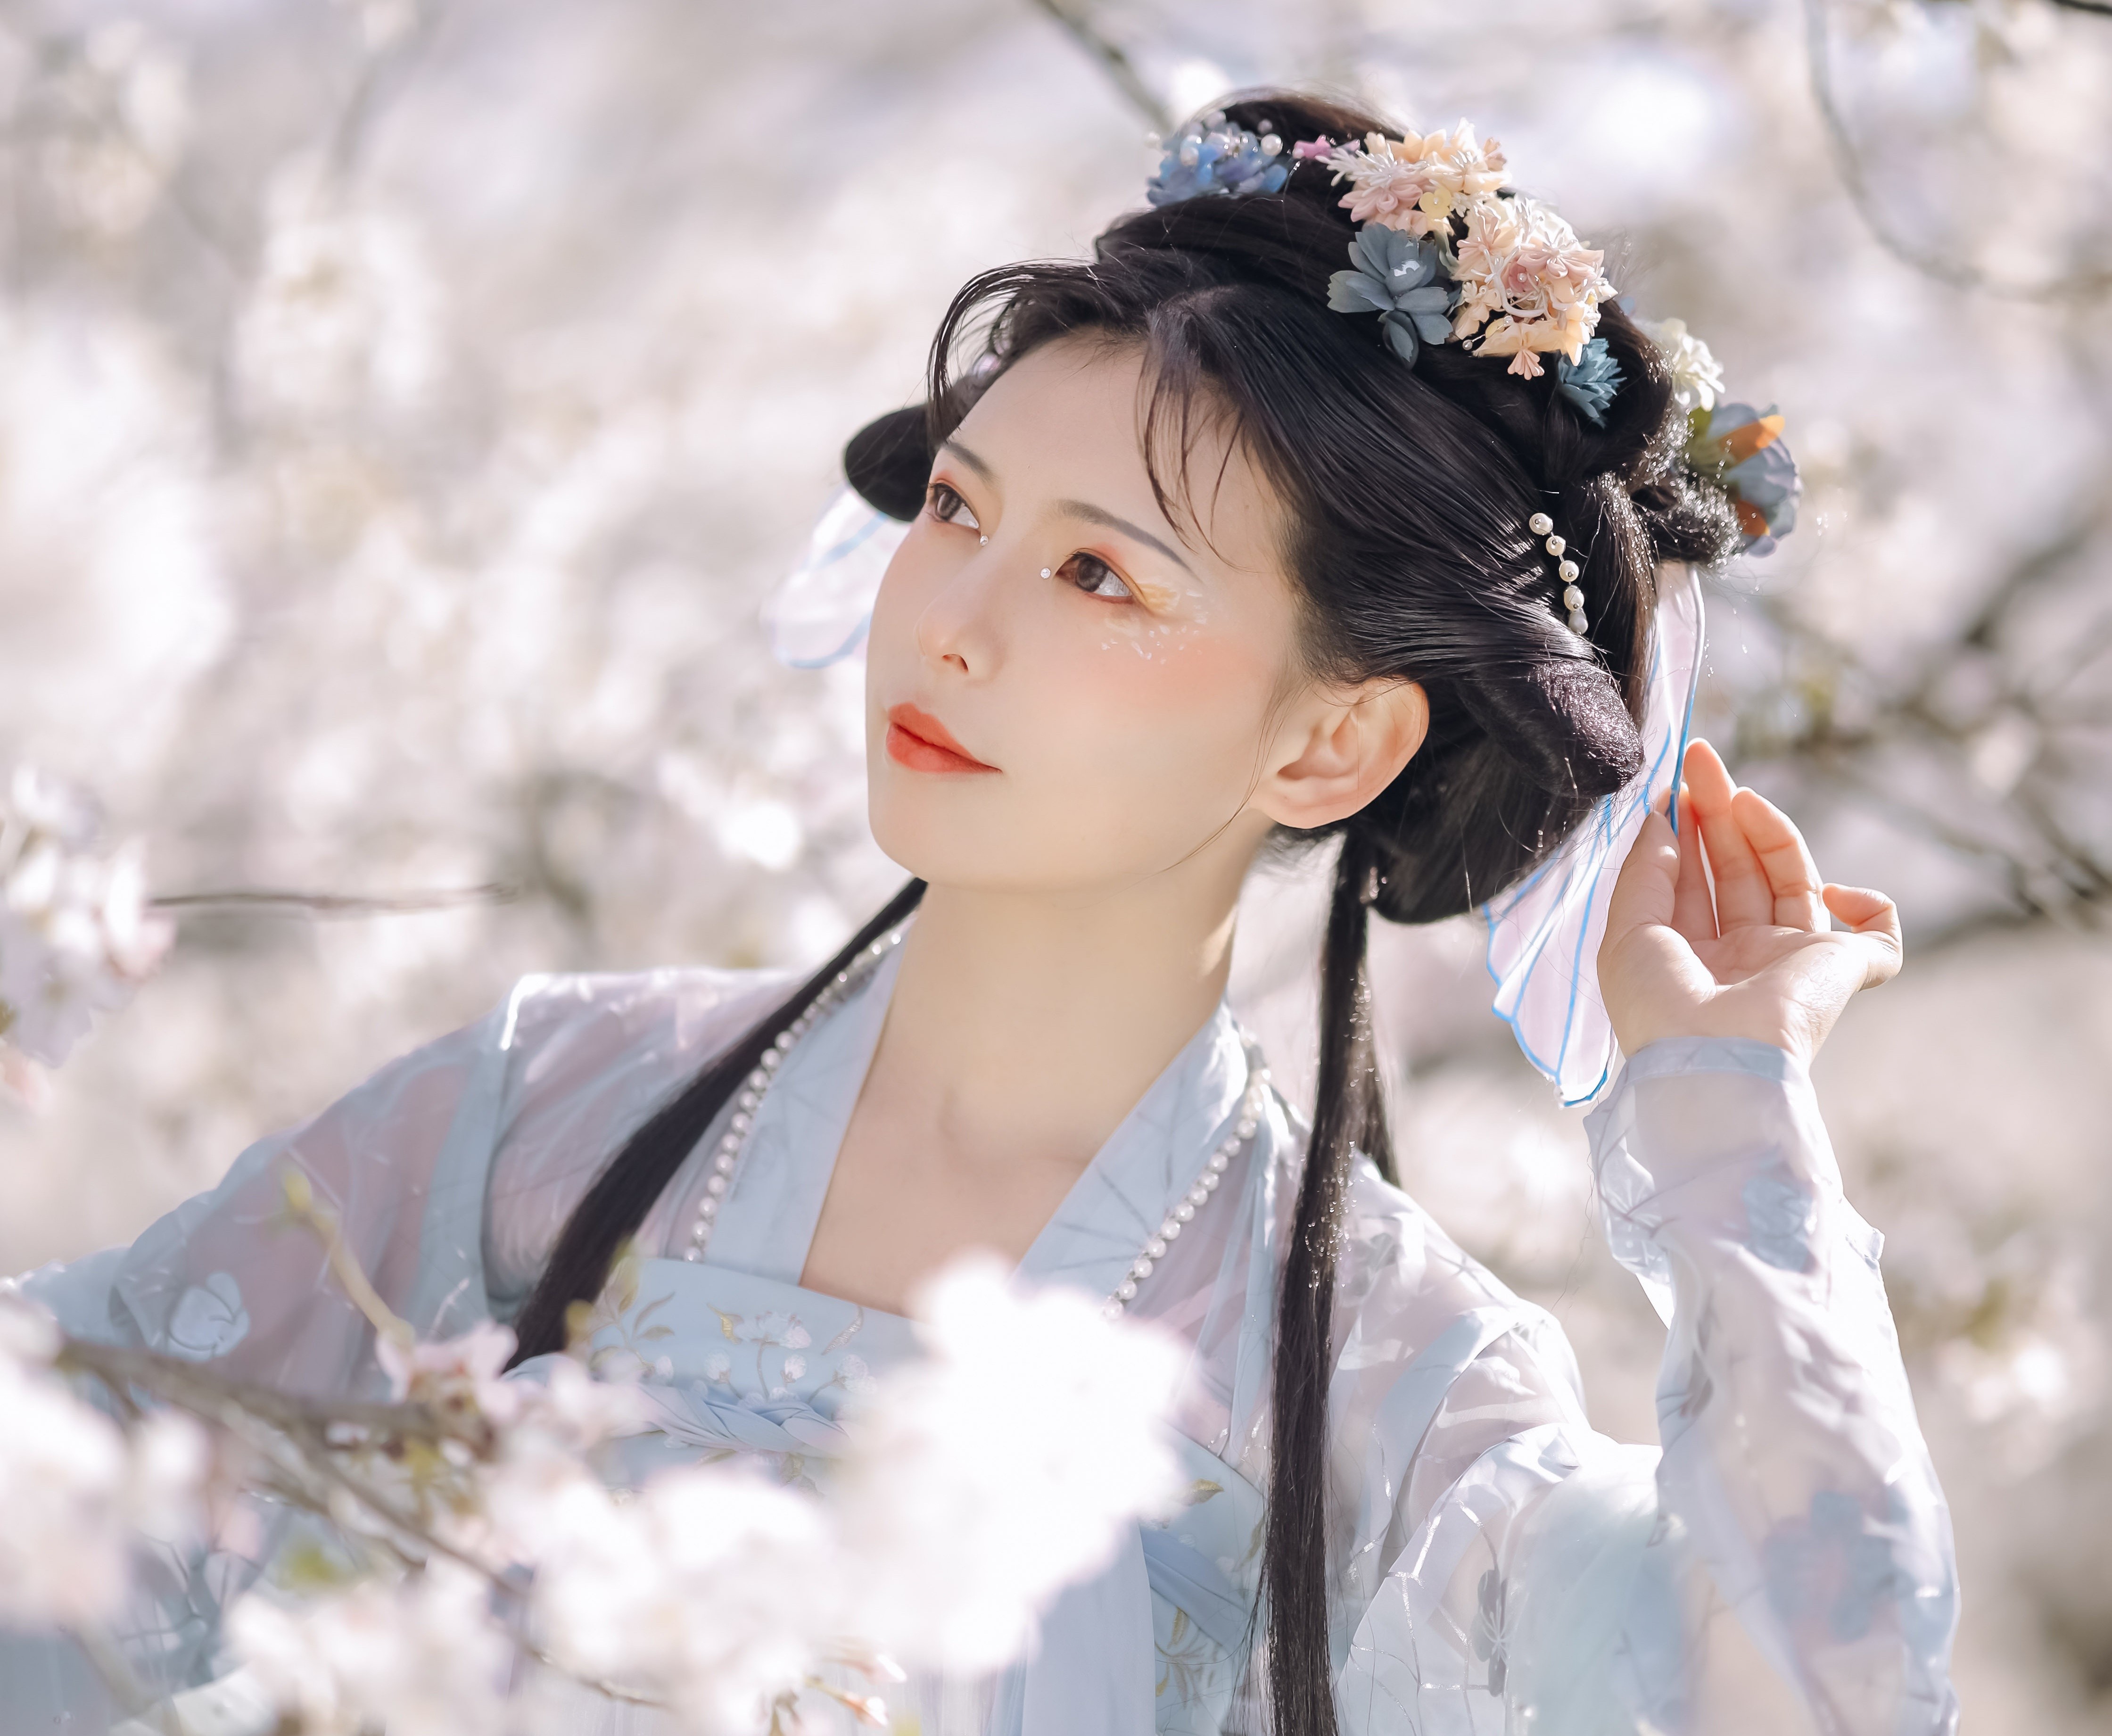 People 4480x3682 hanfu women outdoors flower in hair Asian